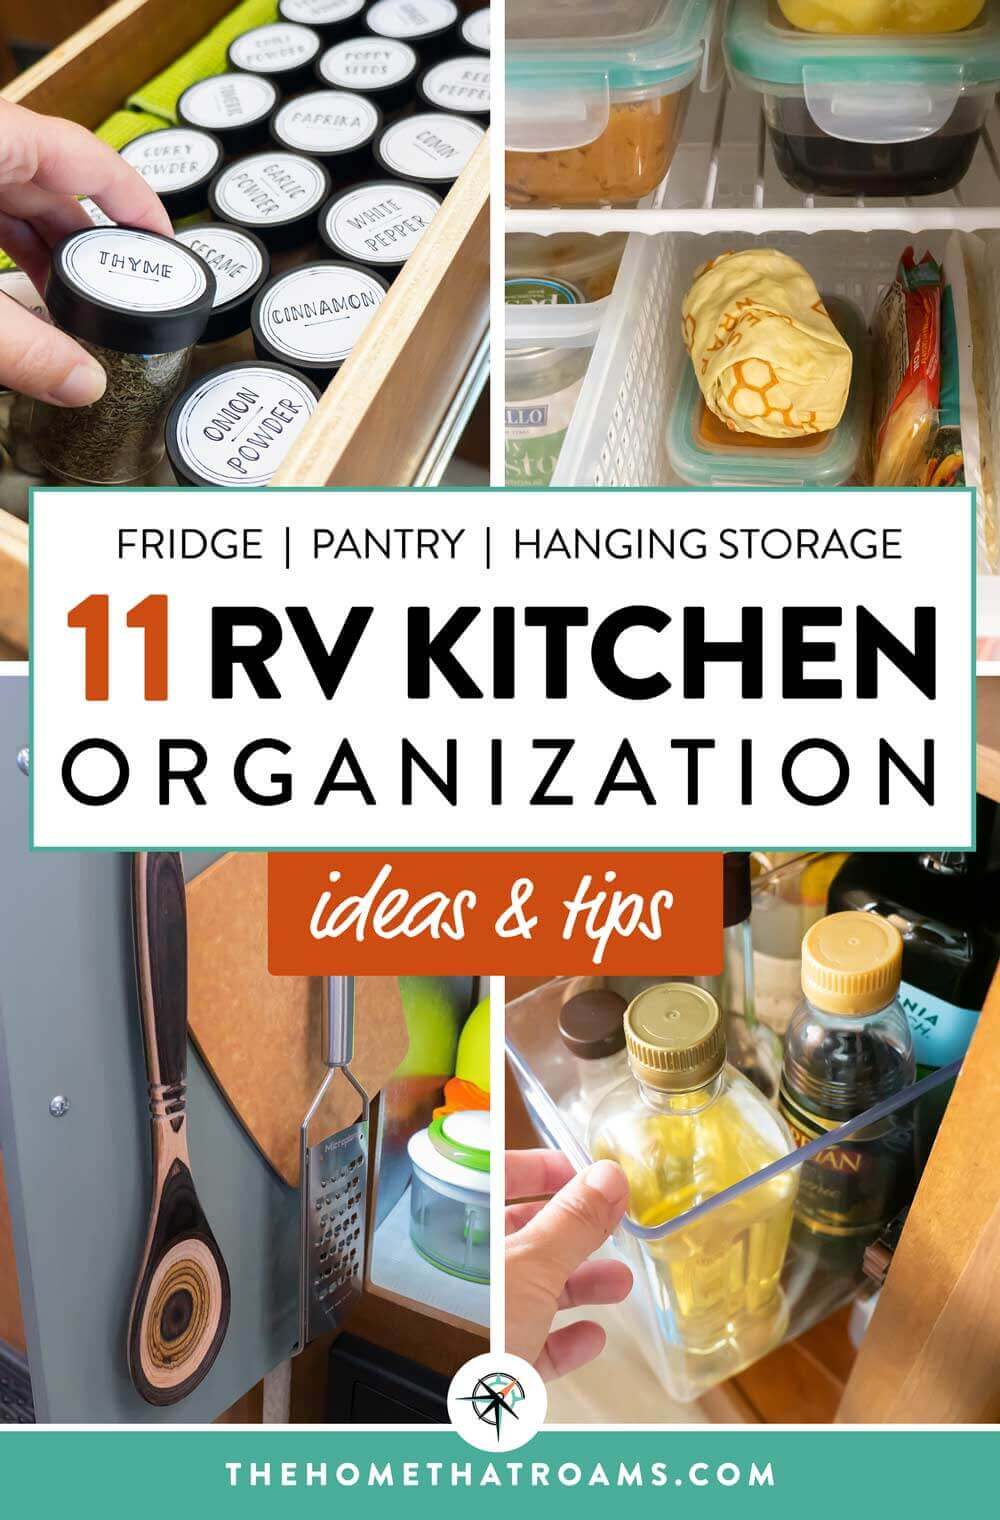 Pinterest image of RV kitchen organization ideas - spice jars, fridge, hanging items, pantry